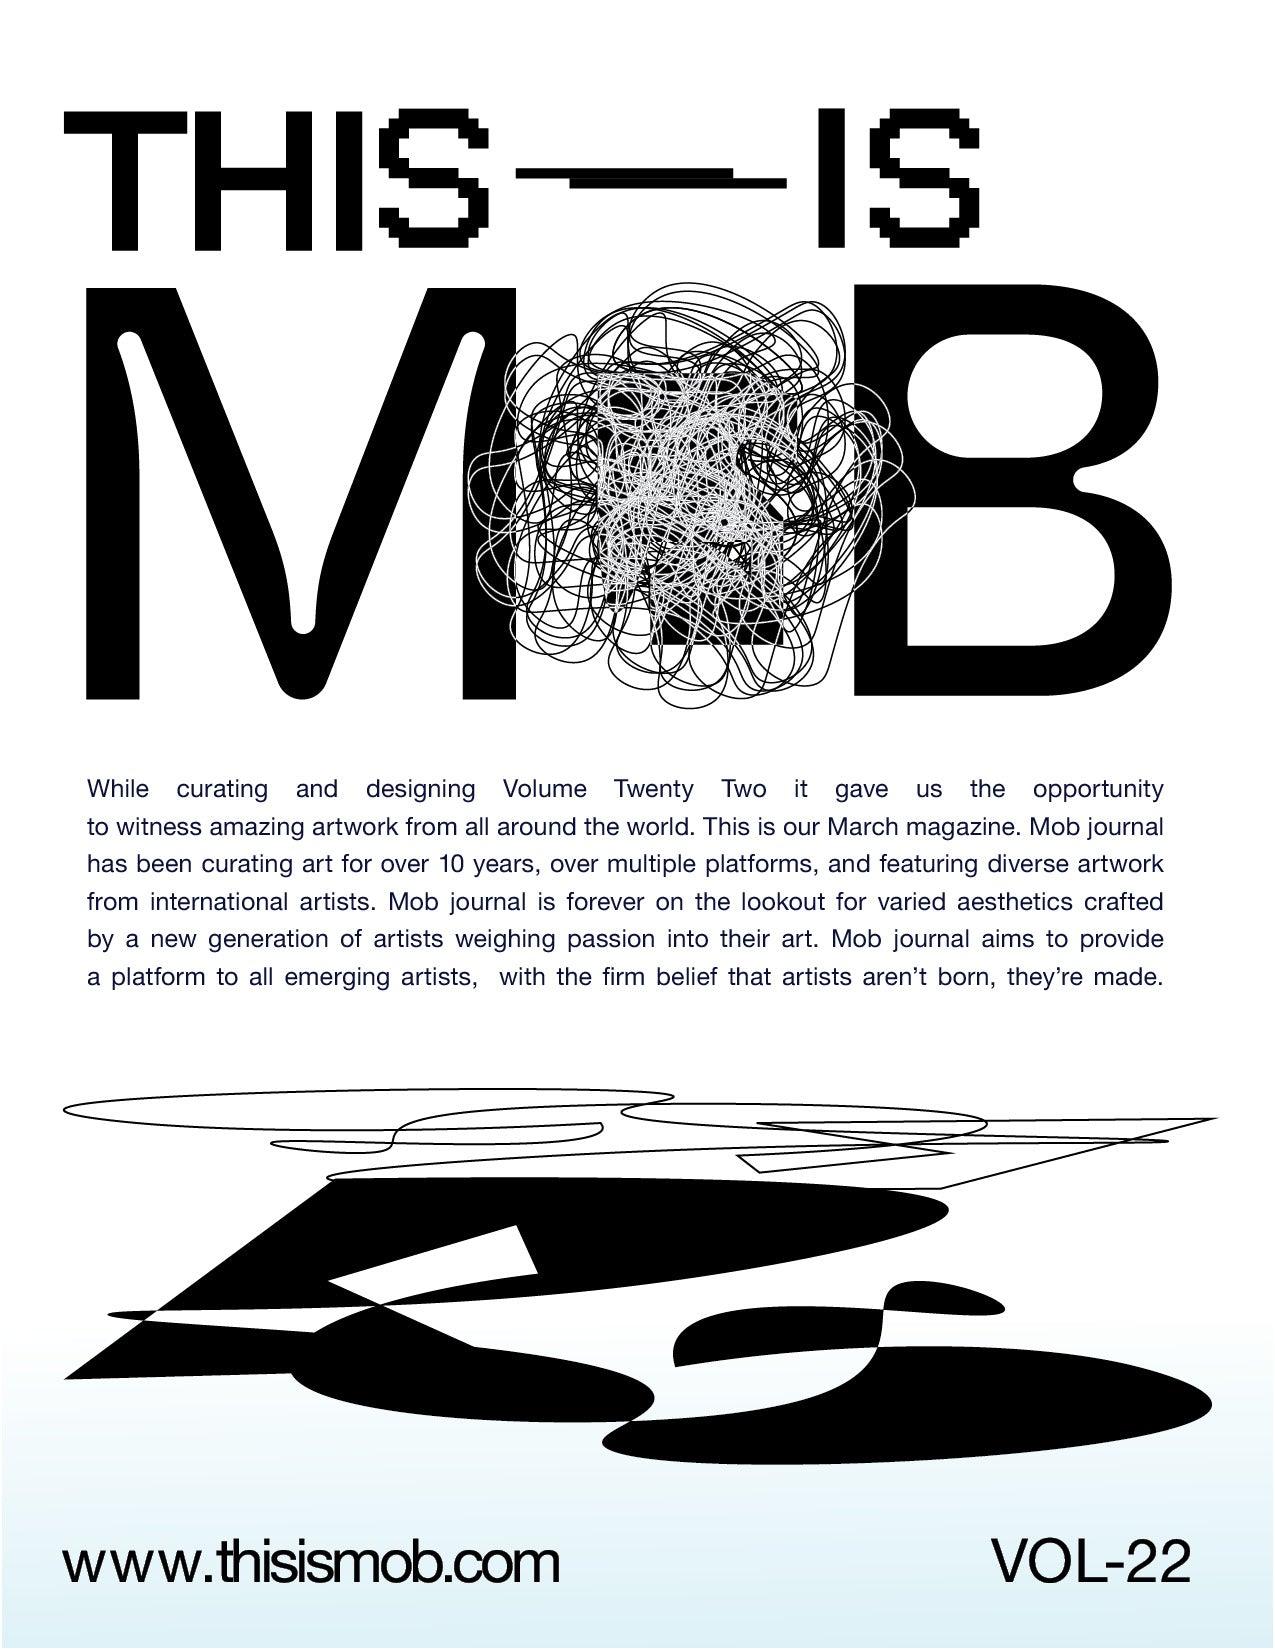 MOB JOURNAL | VOLUME TWENTY TWO | ISSUE #31 - Mob Journal